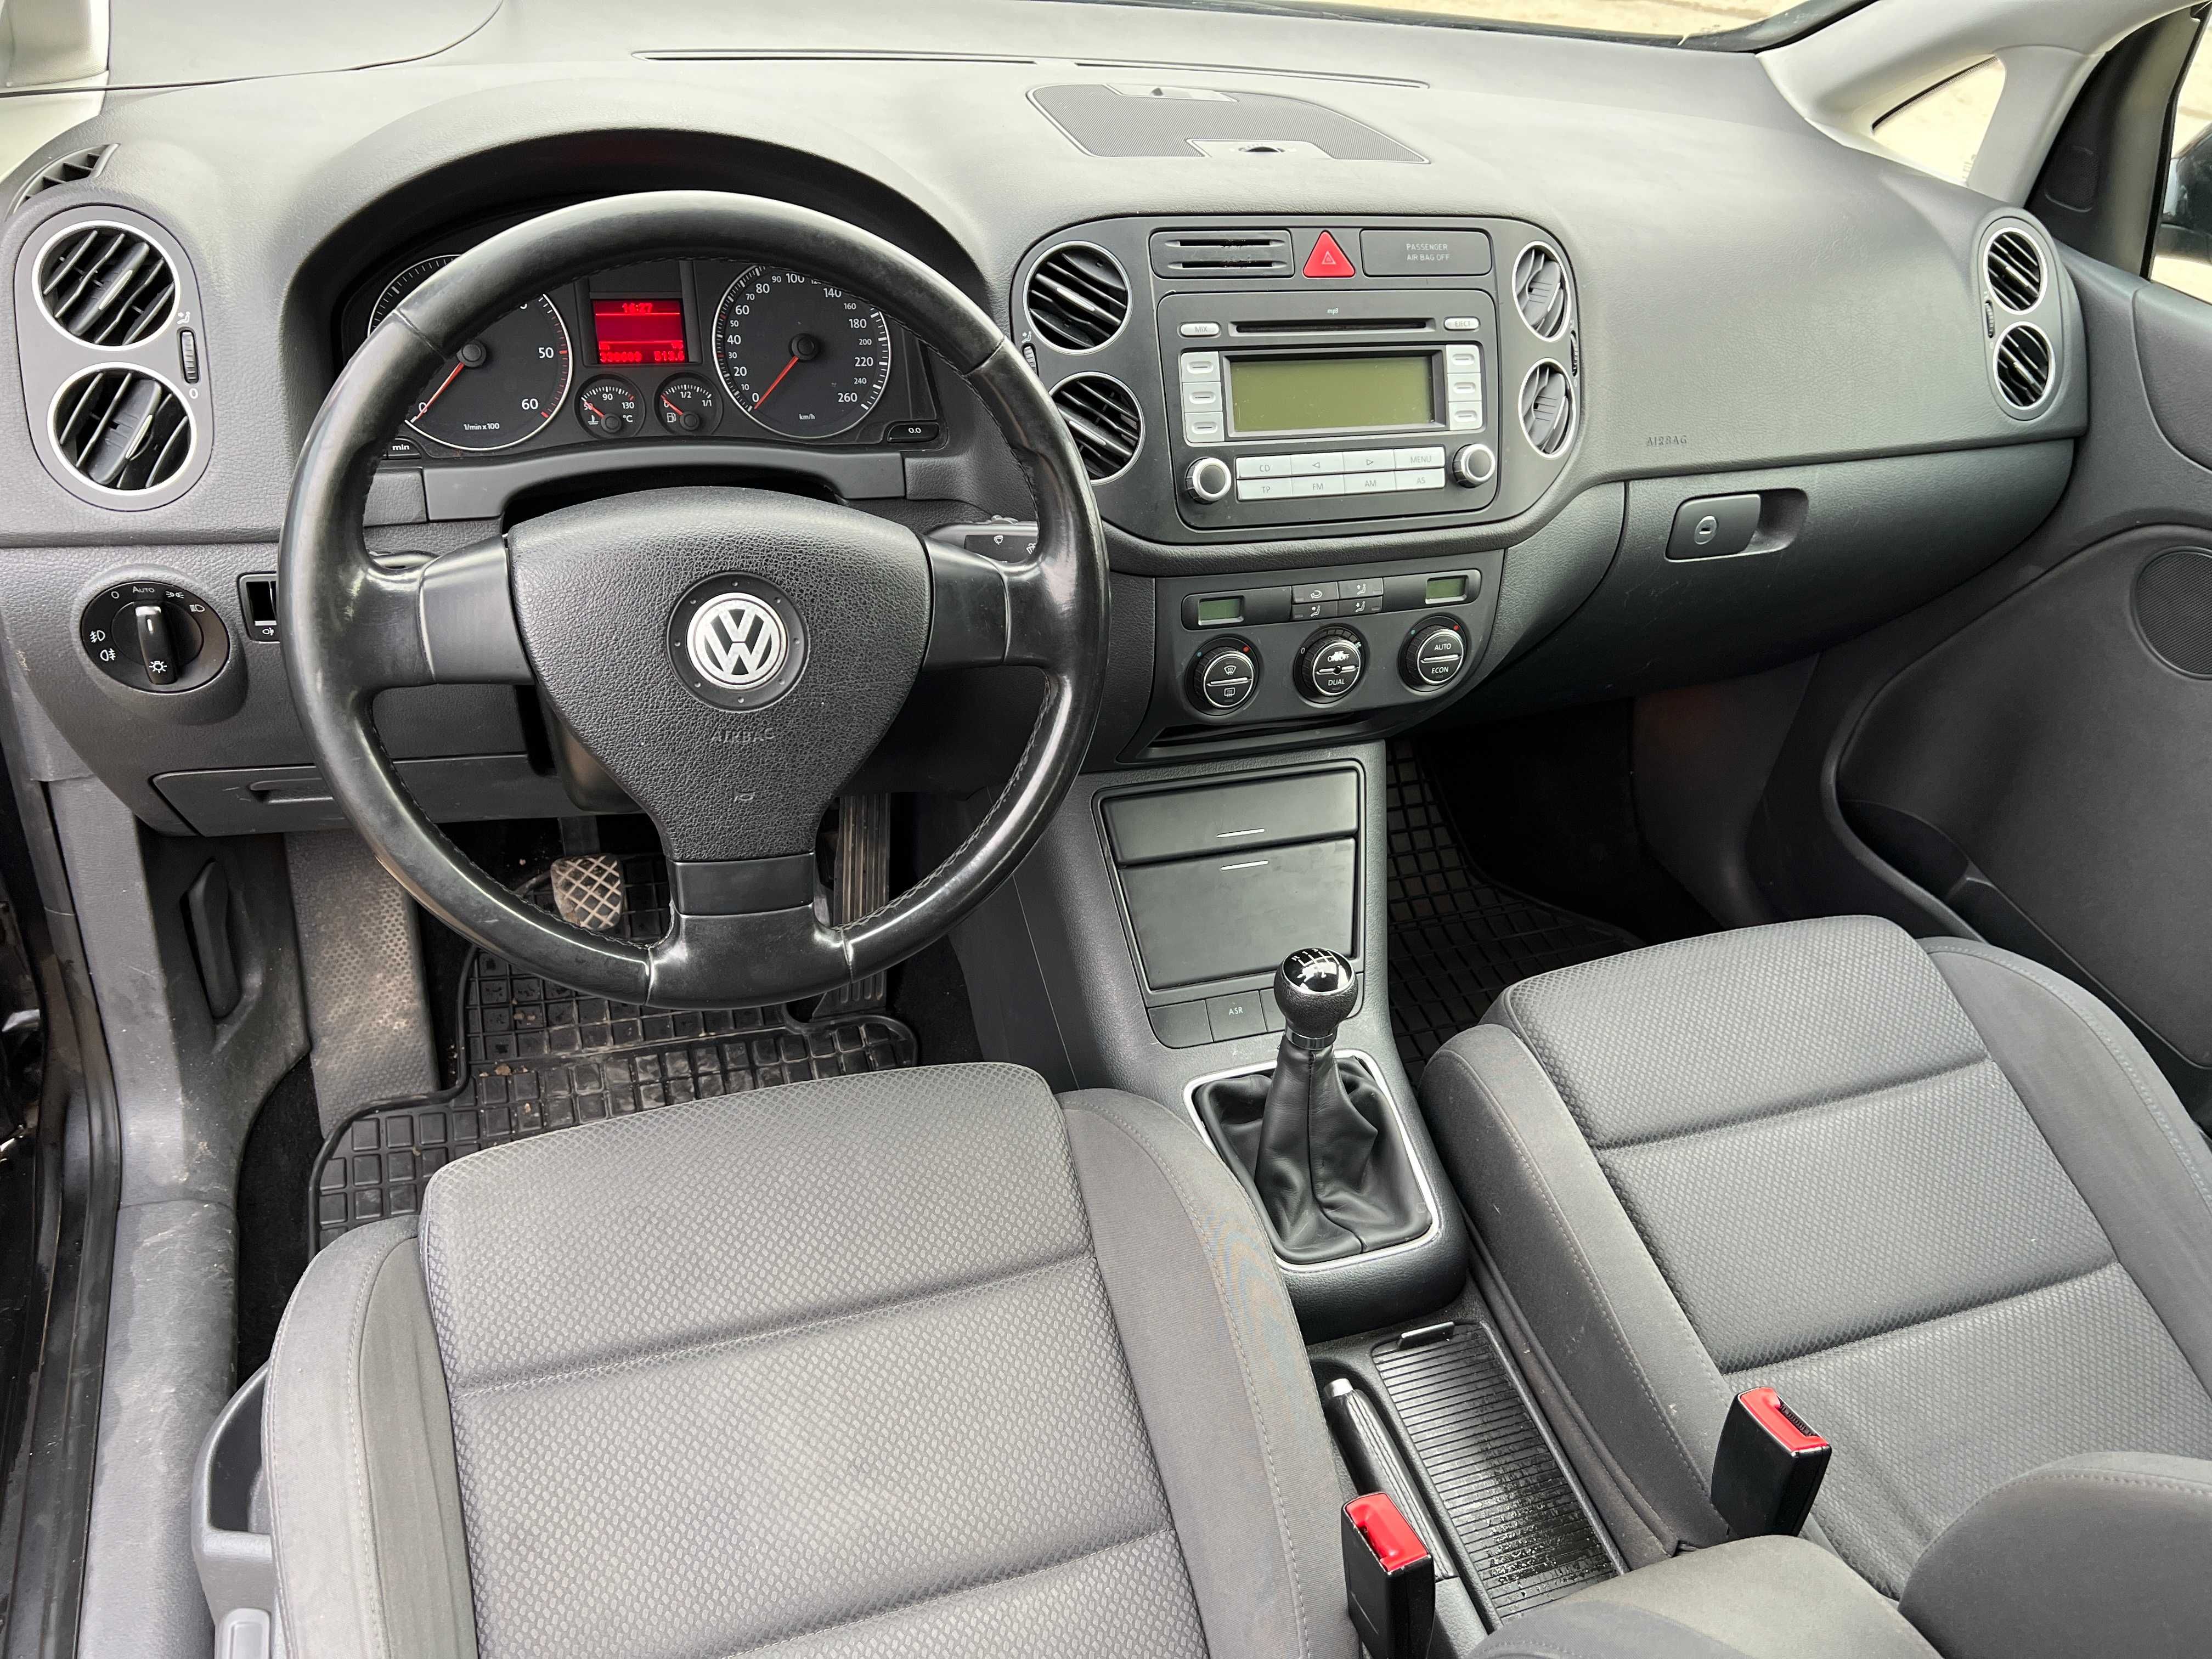 RENT A CAR Inchiriez Auto SEAT Leon 1.9 TDI ,VW GOLF 2.0 TDI nonstop